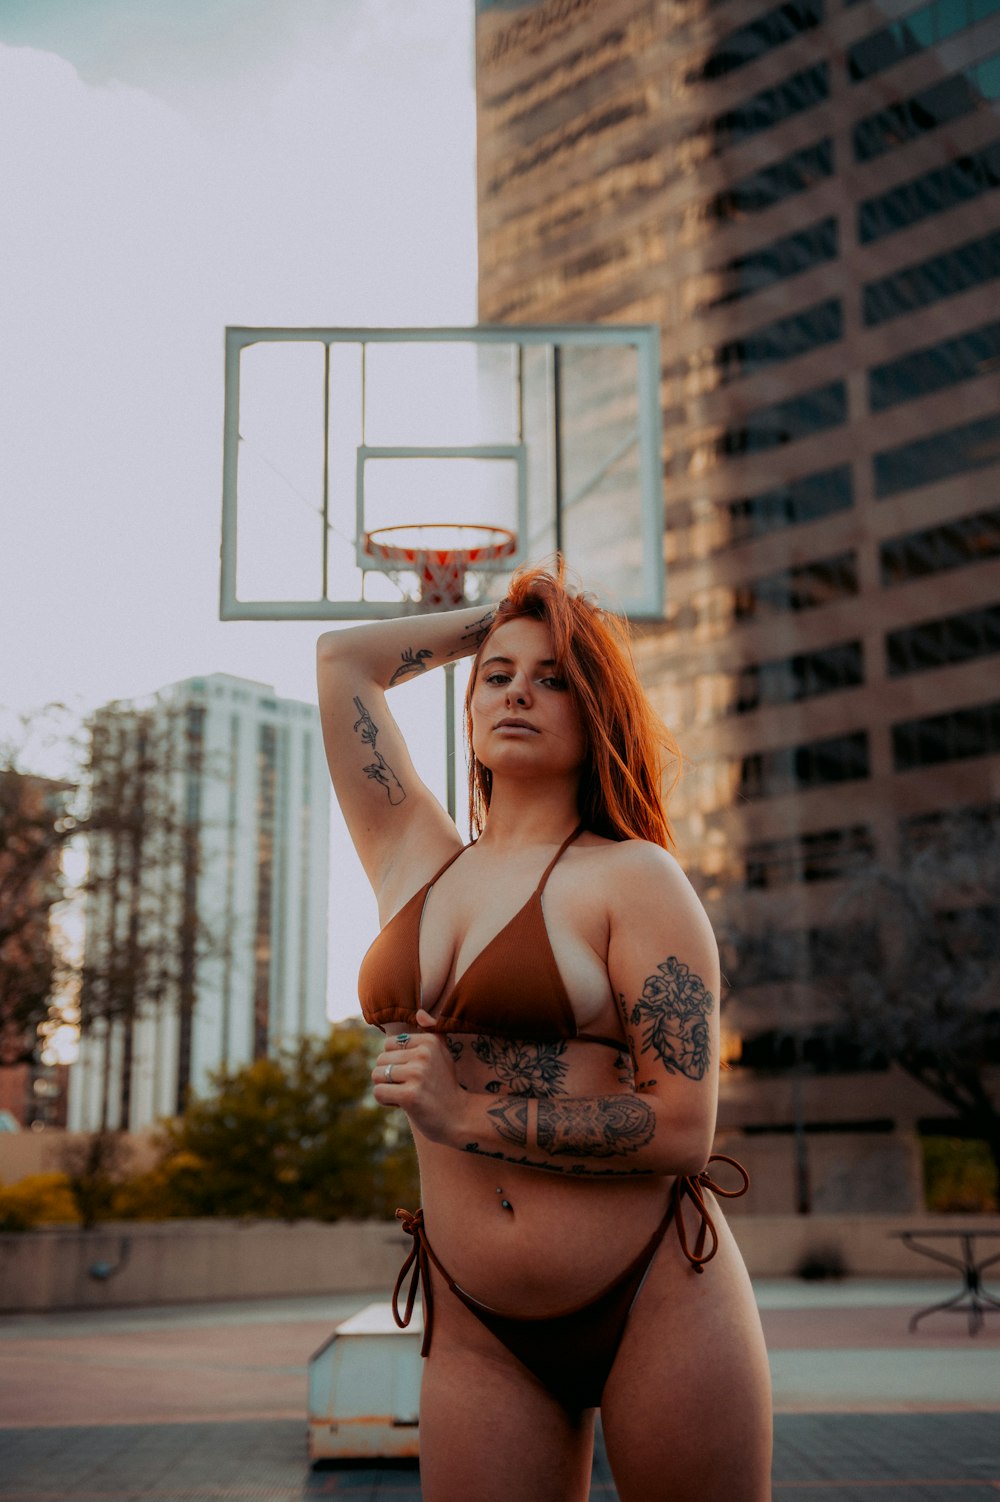 Eine Frau im Bikini mit einem Basketballkorb